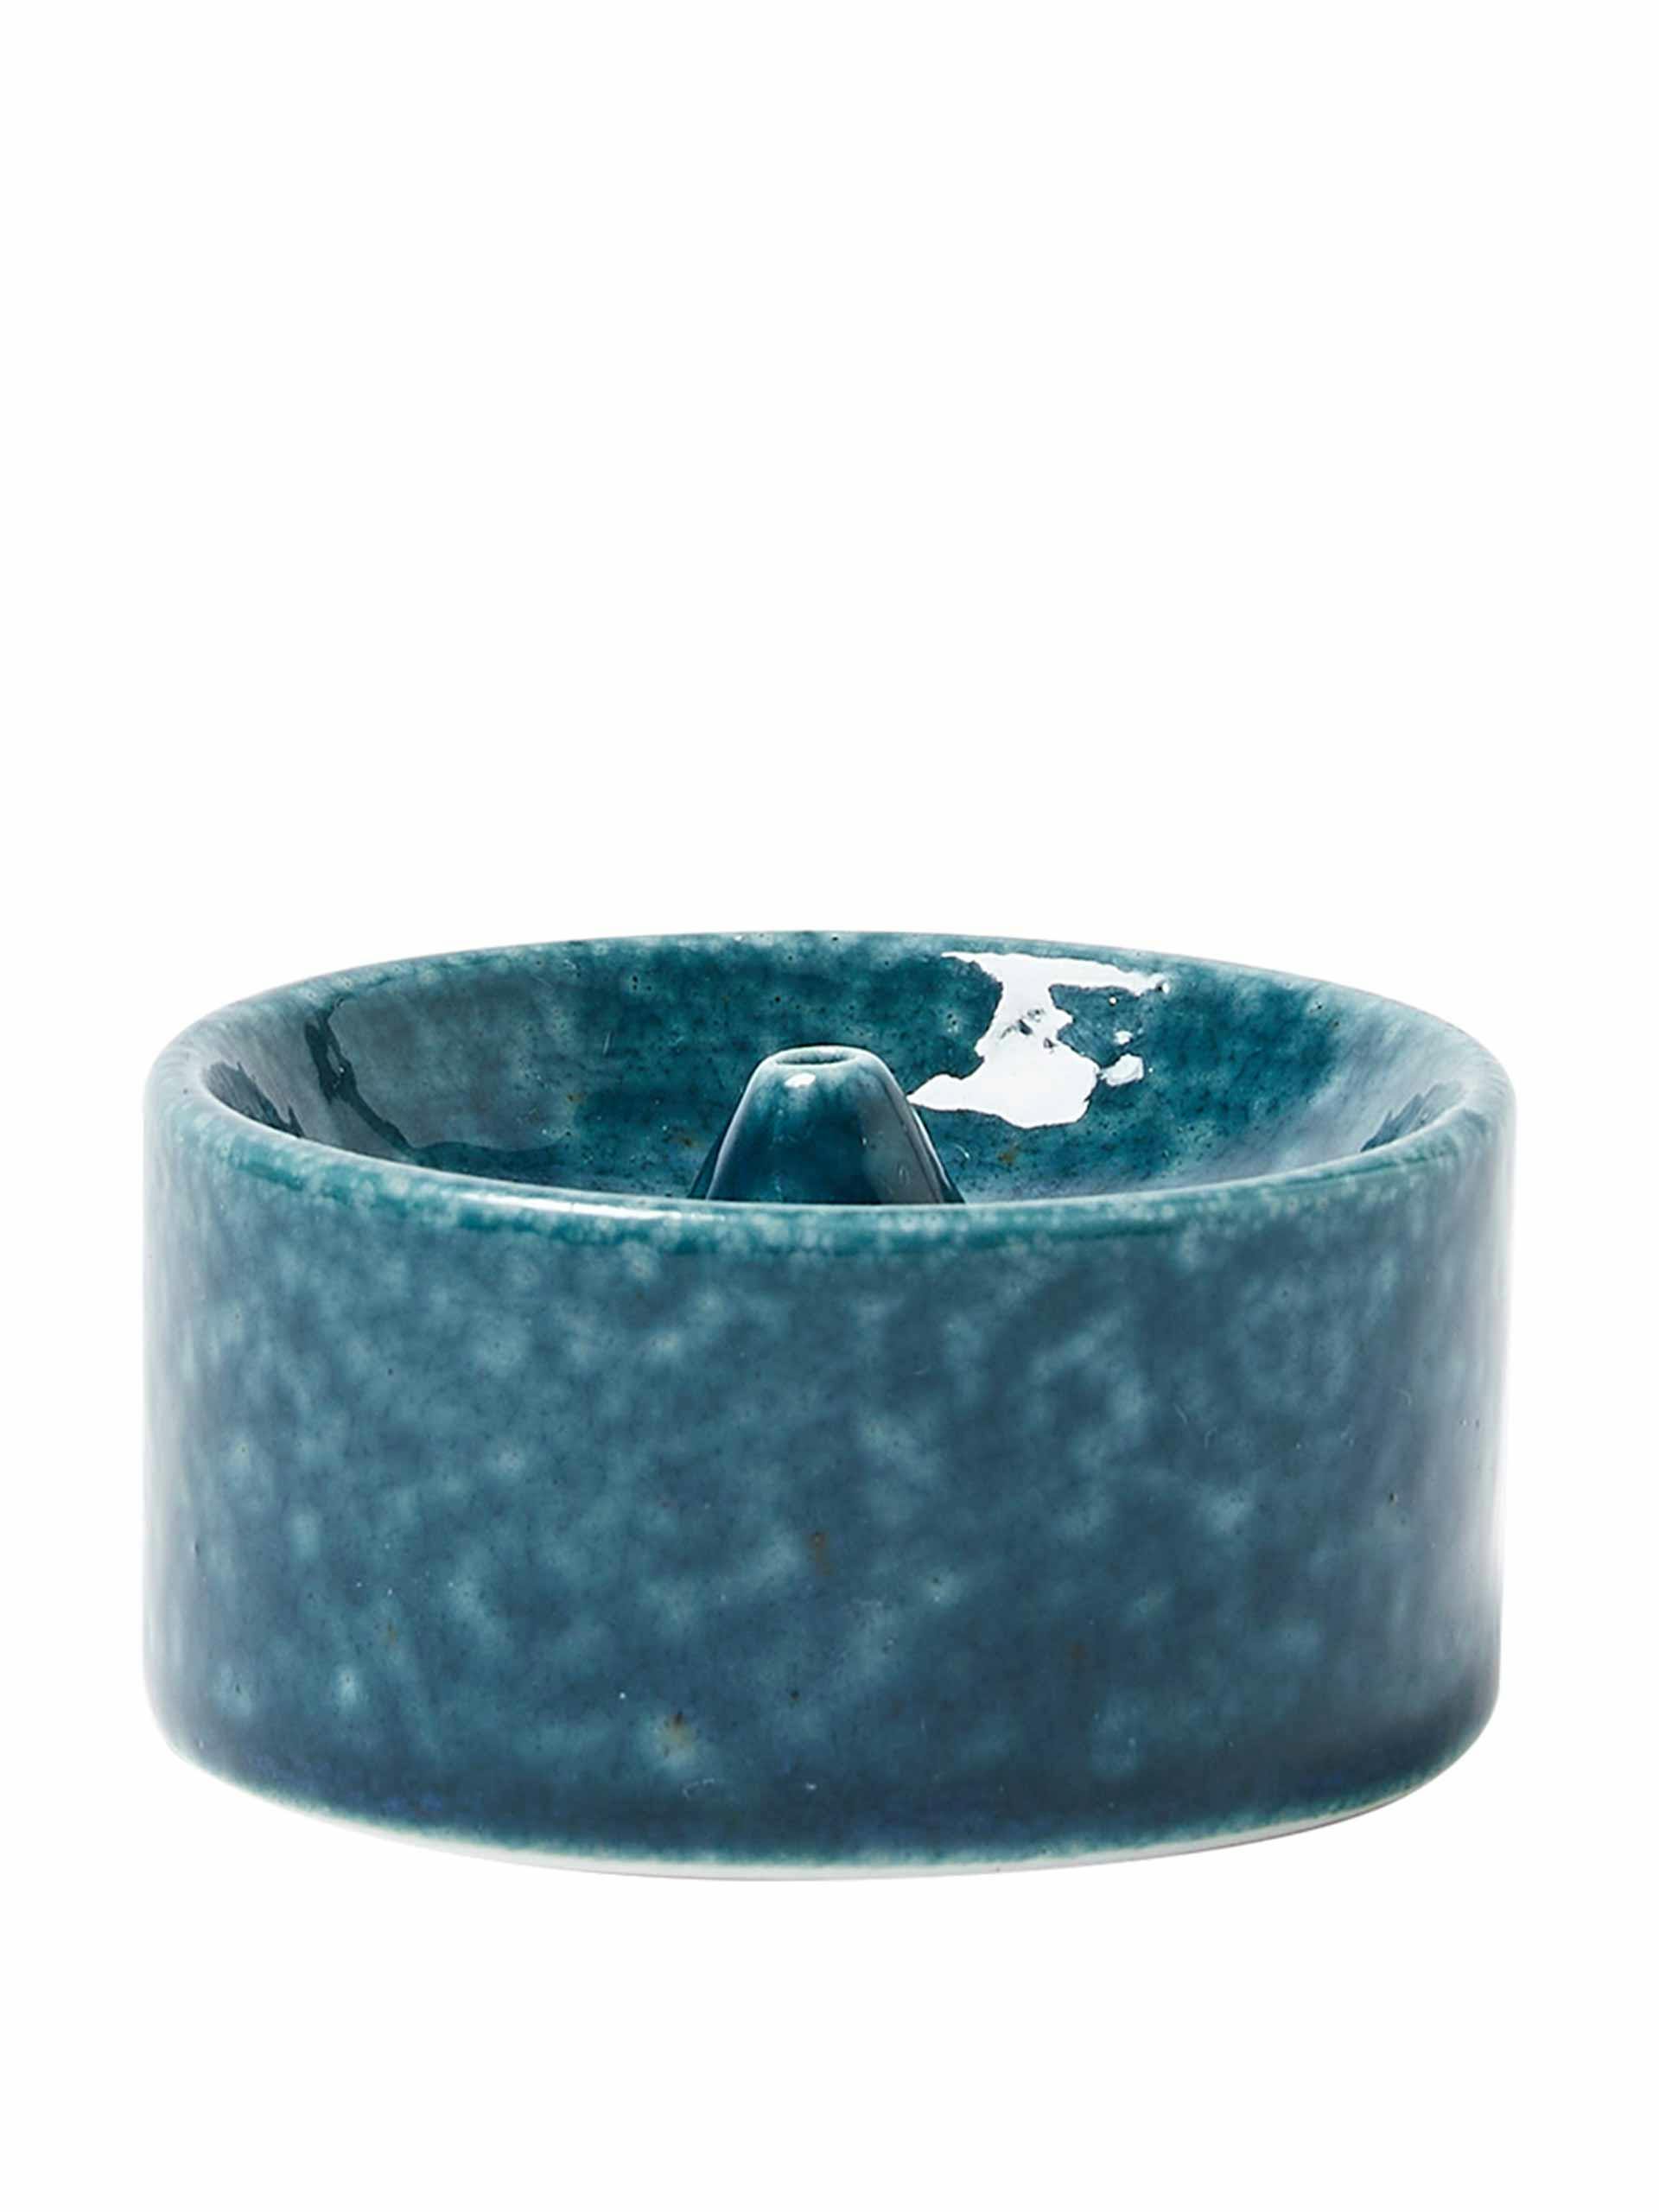 Round blue ceramic incense holder